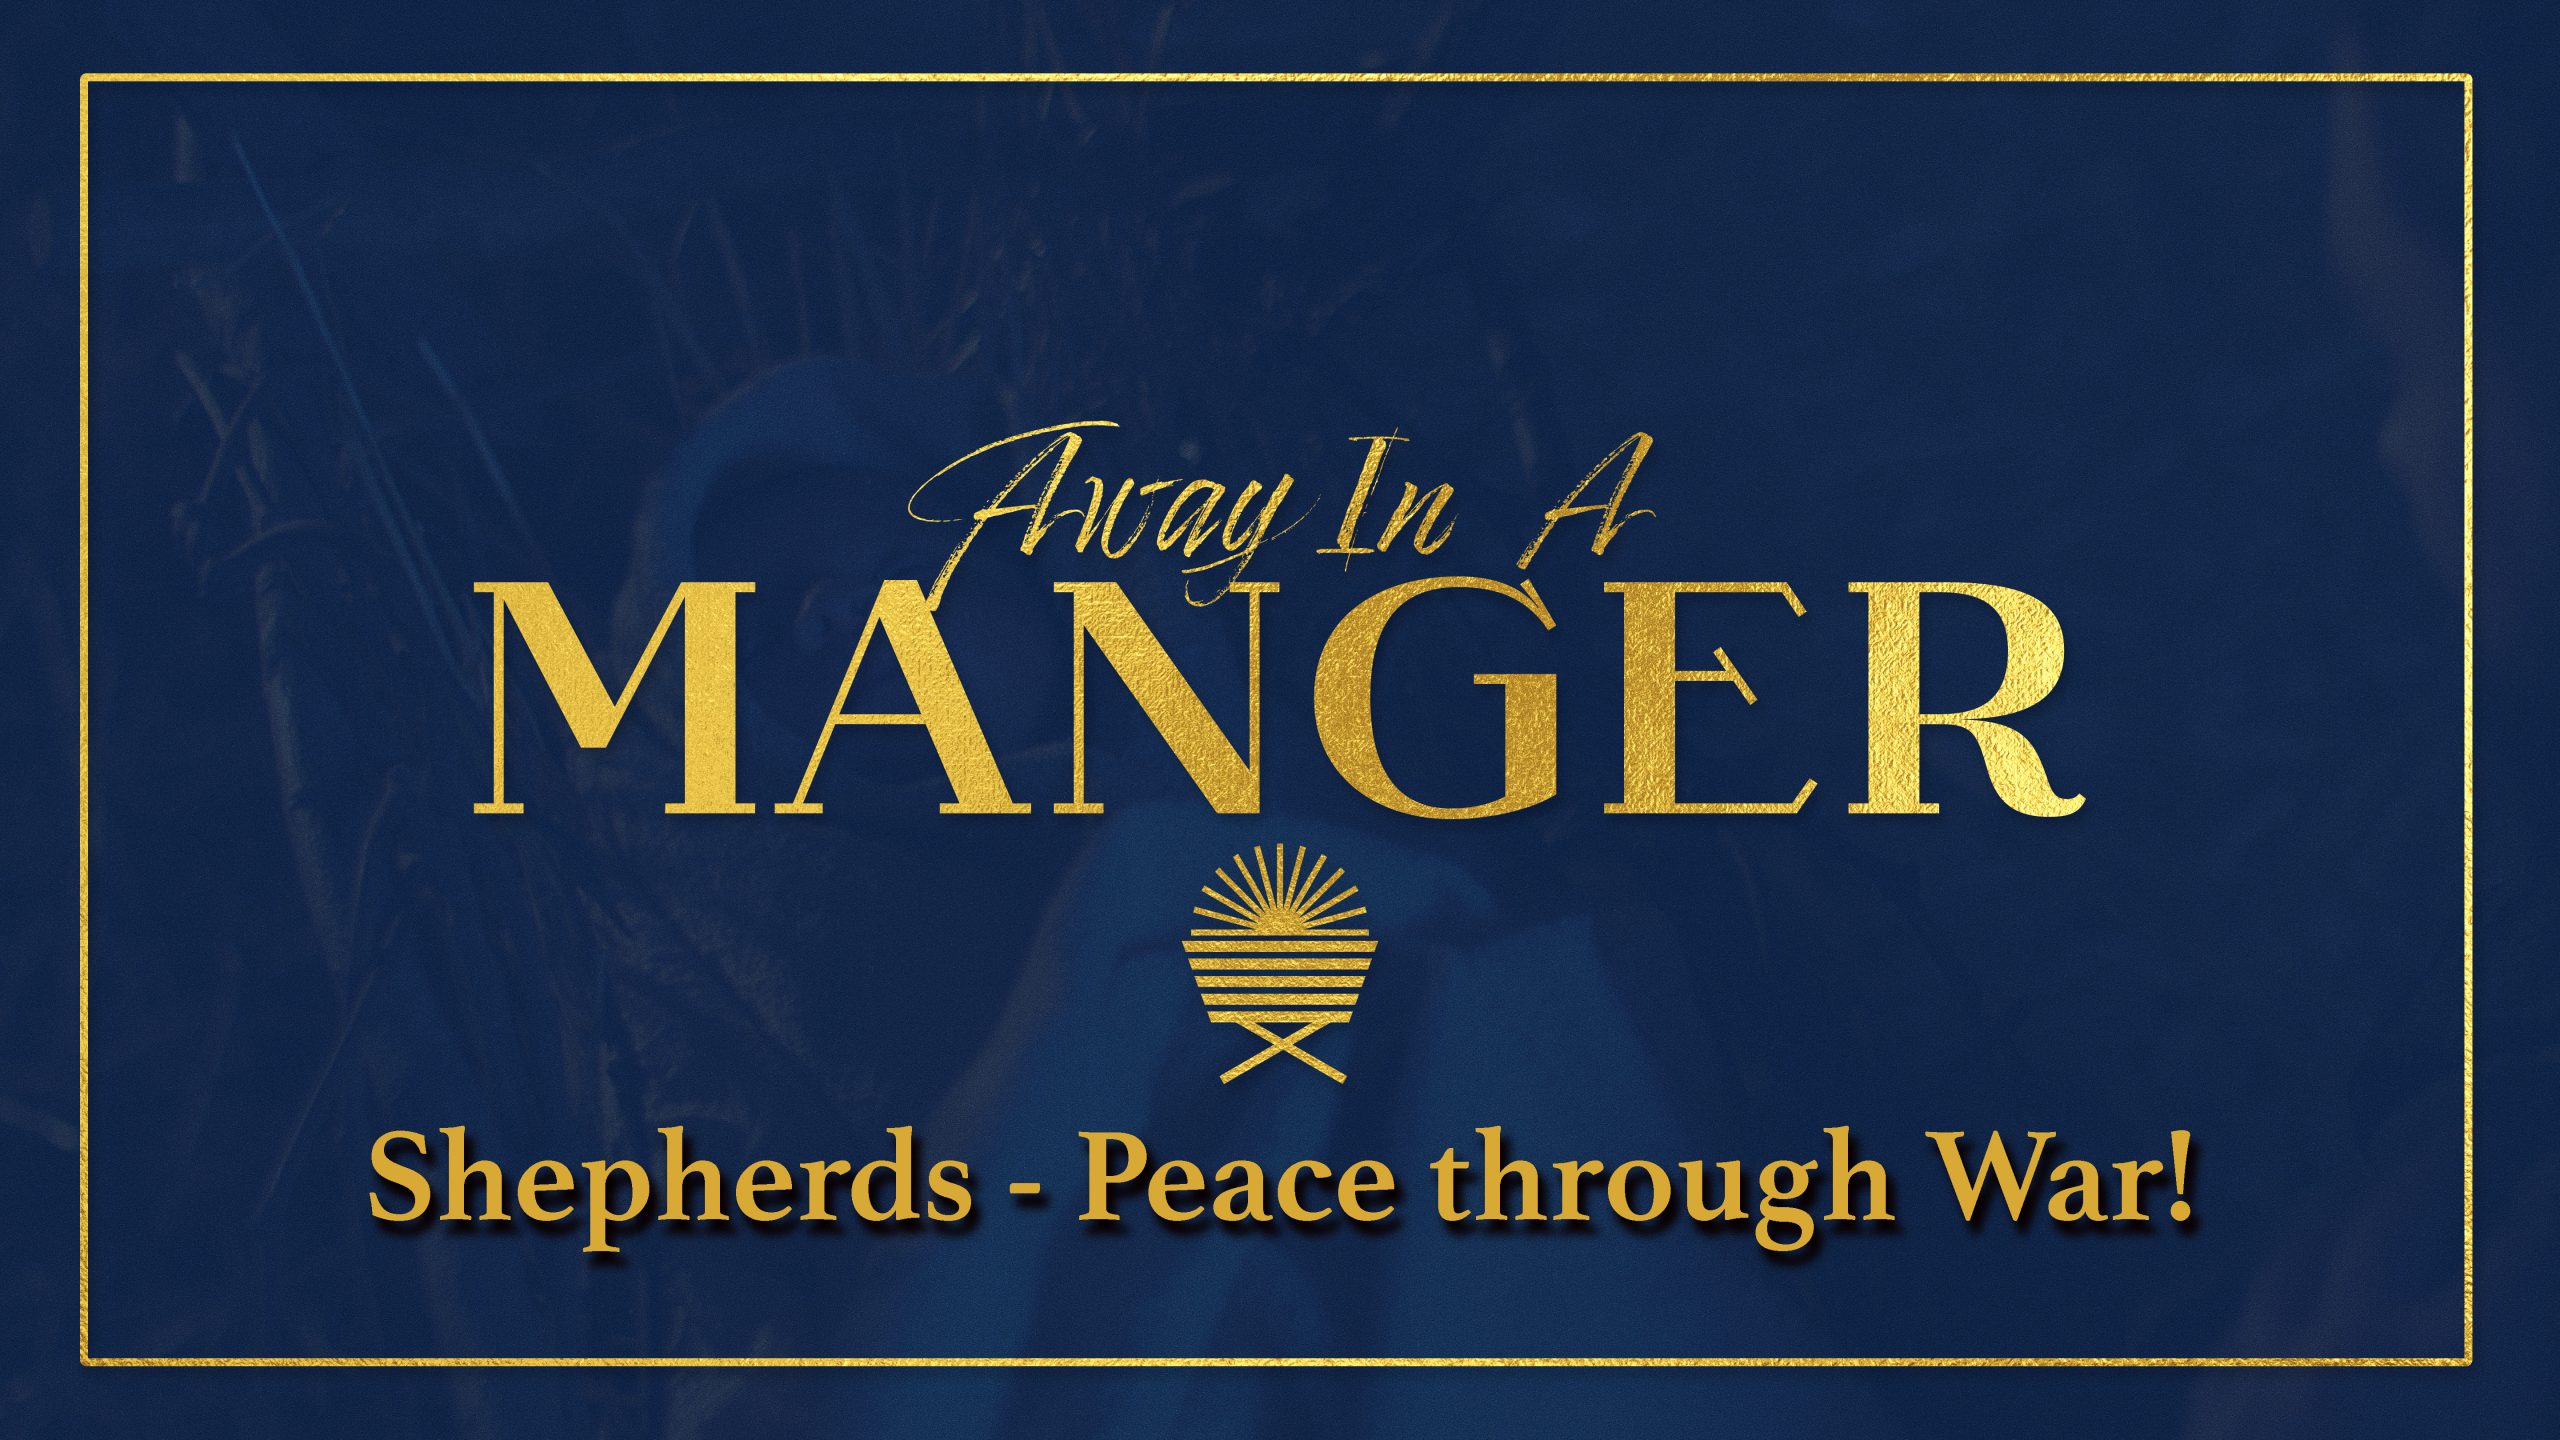 Shepherds – peace through war